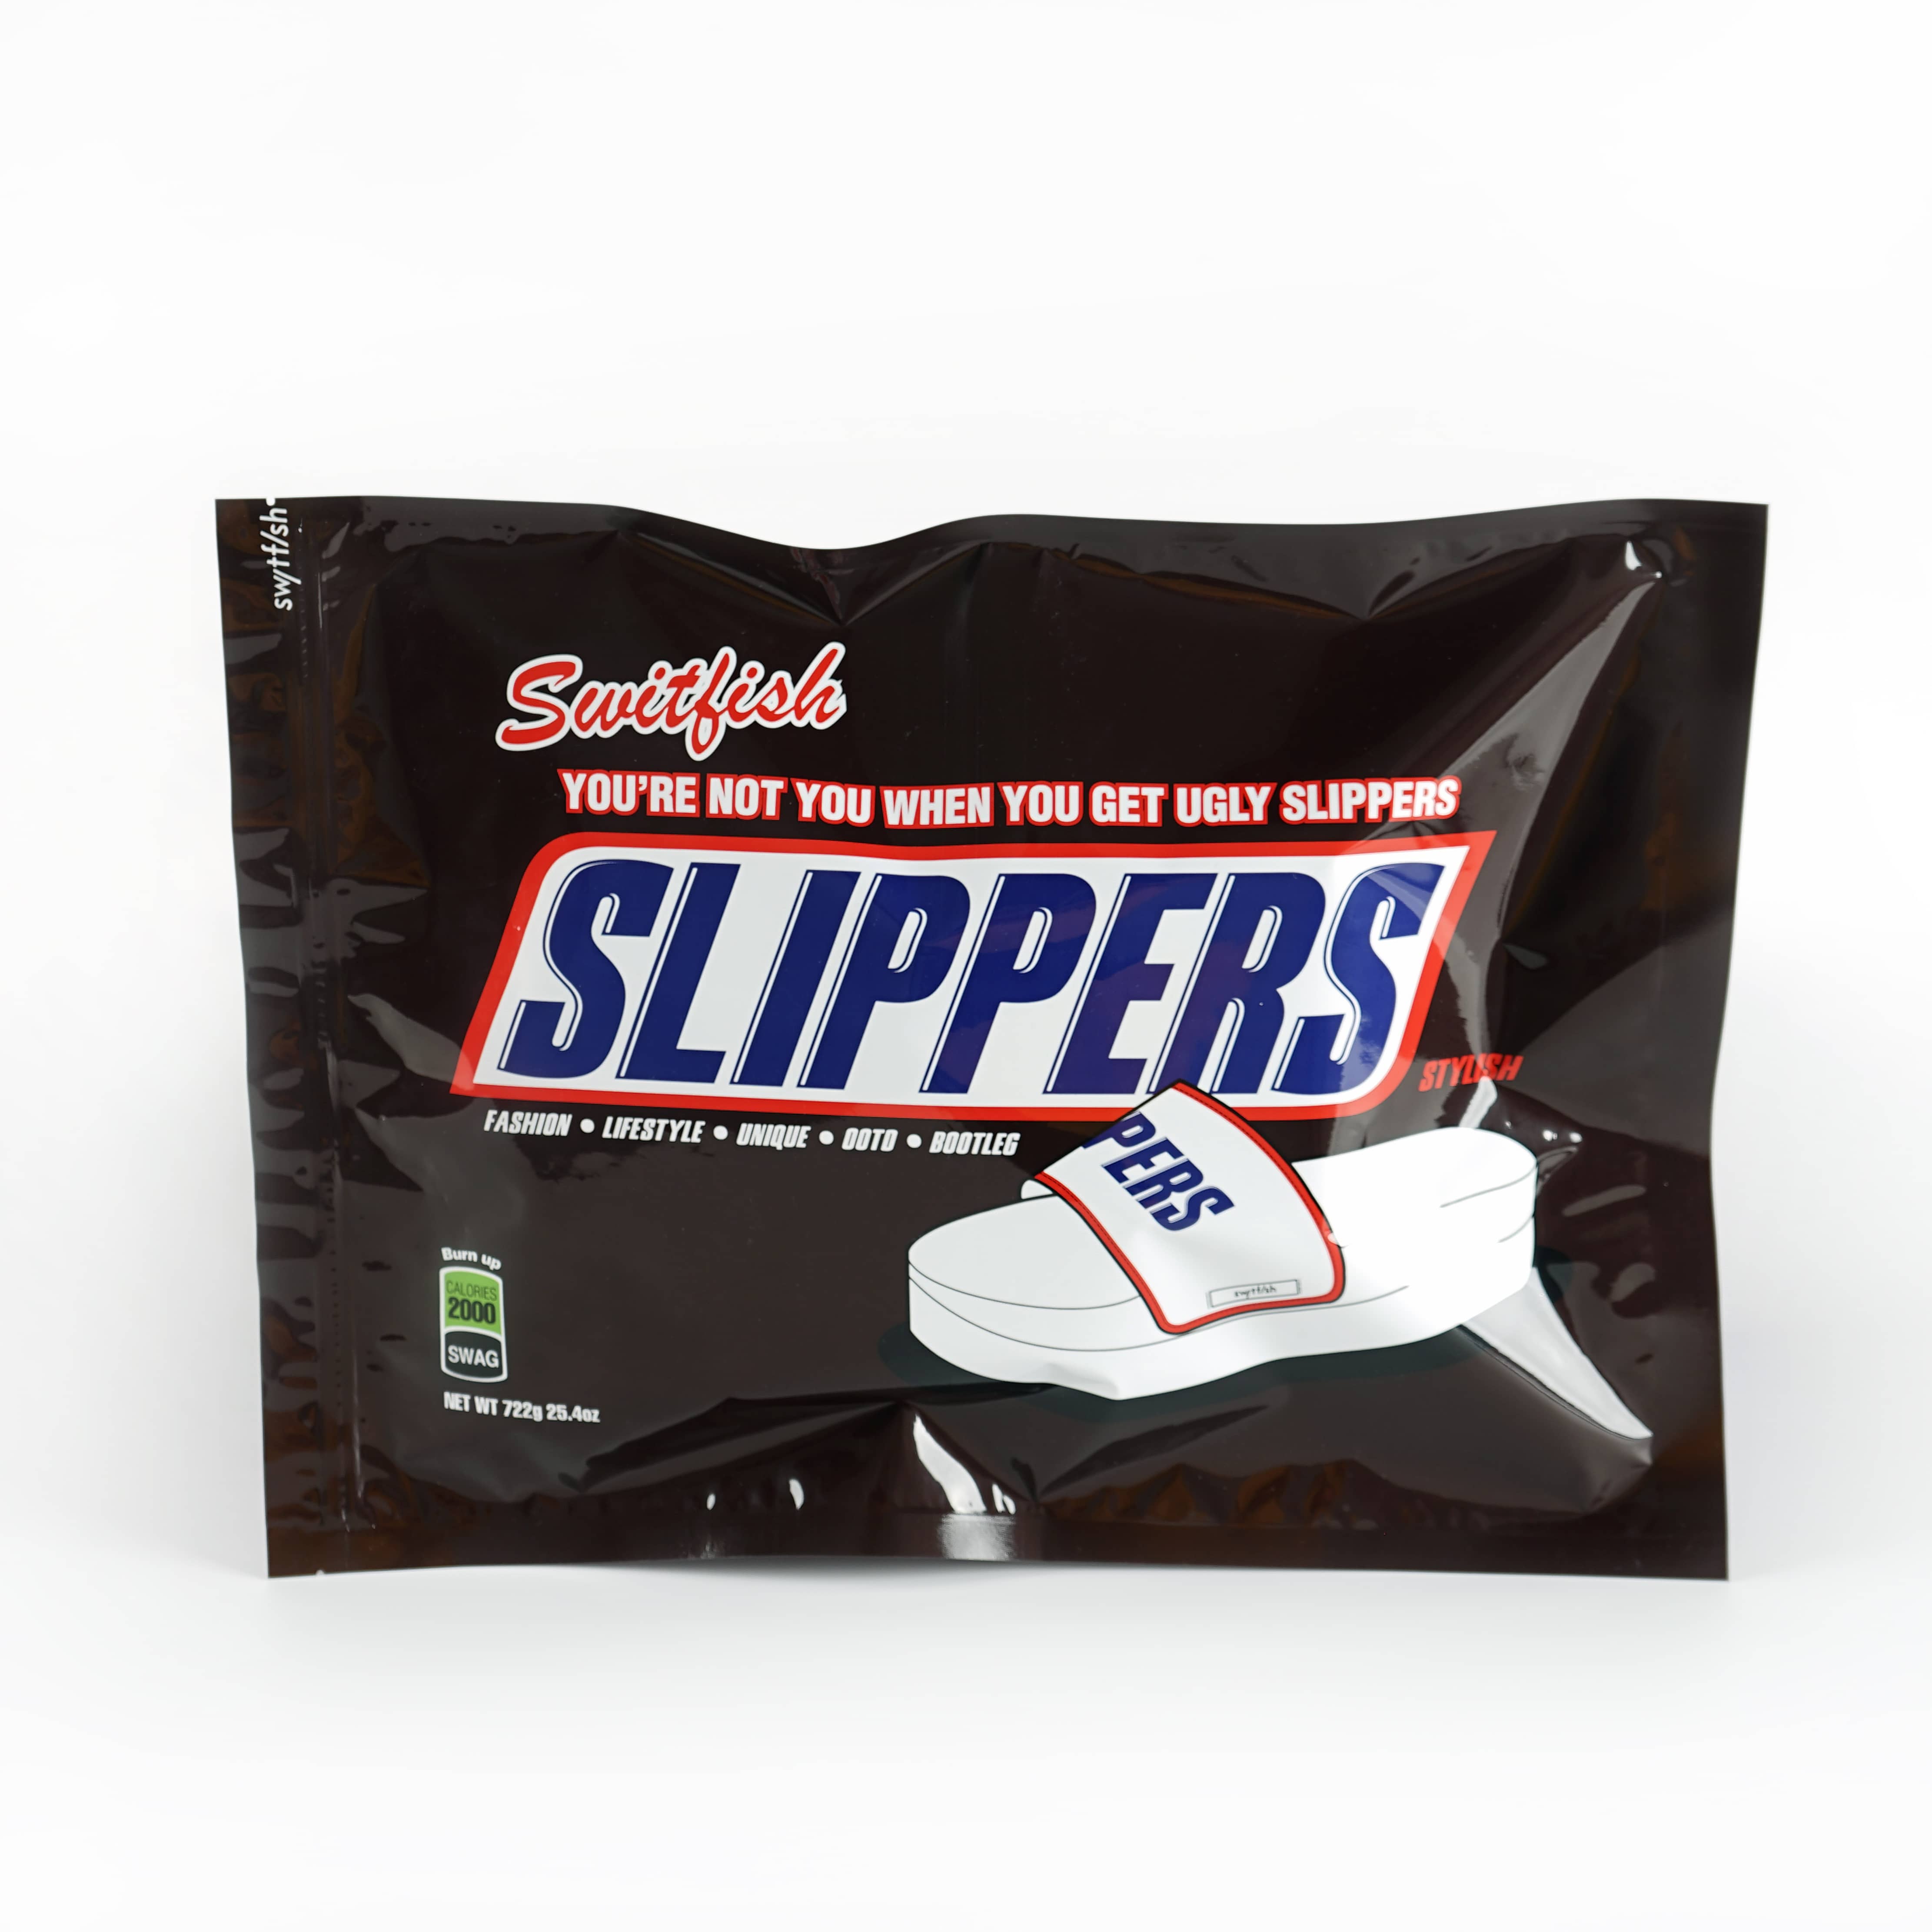 Clothing Slipper Sweatshirt Zipped Zipper Plastic Packaging Bags Featured Image